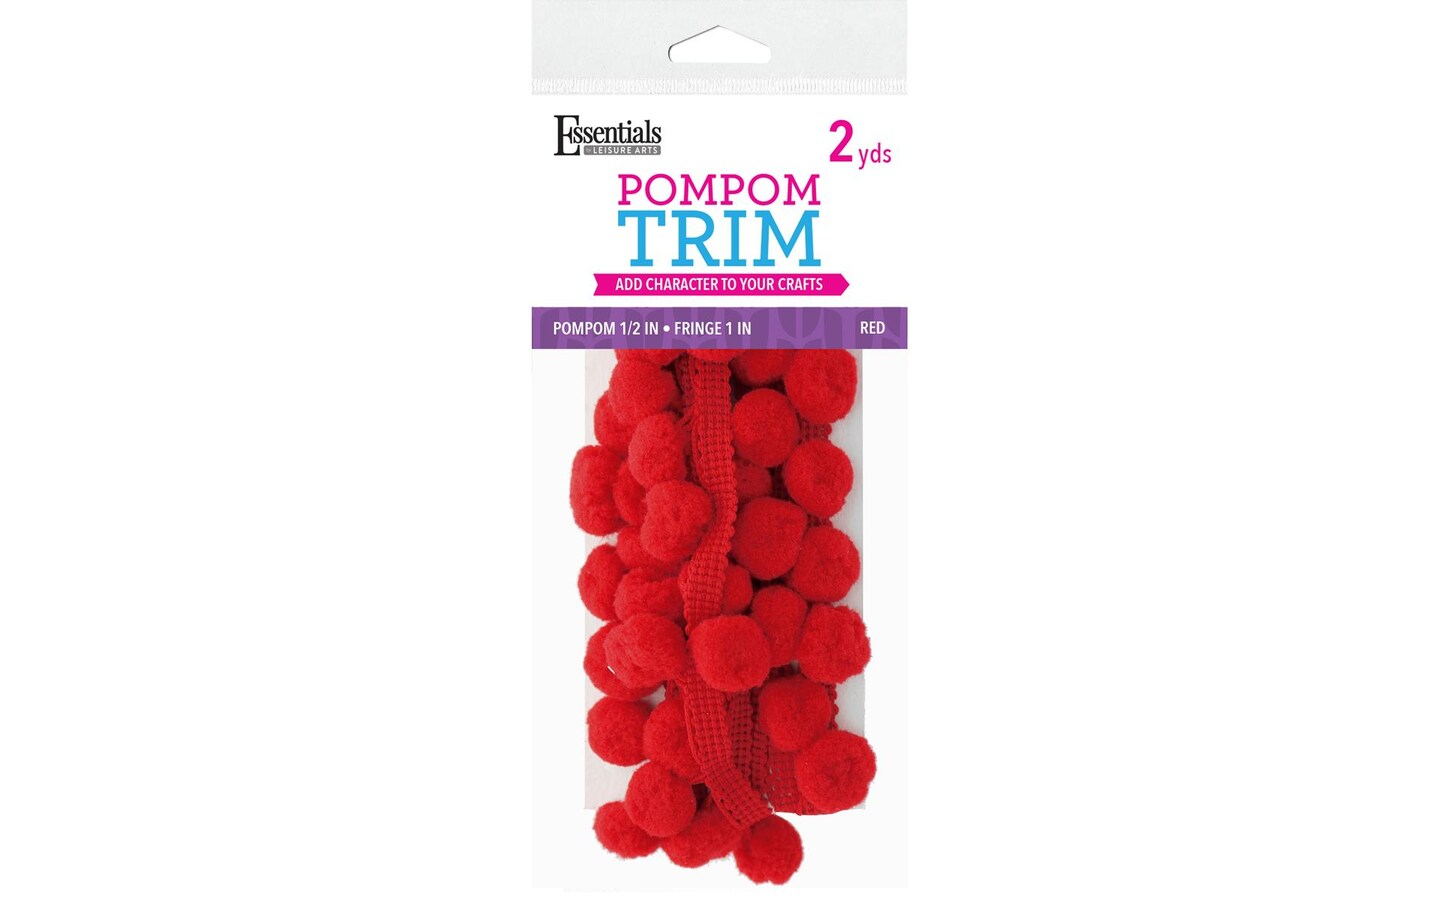 Essentials by Leisure Arts Pom Pom 1/2 Fringe - Red - 1 - 2 yard pom poms  arts and crafts - red pompoms for crafts - craft pom poms - puff balls for  crafts